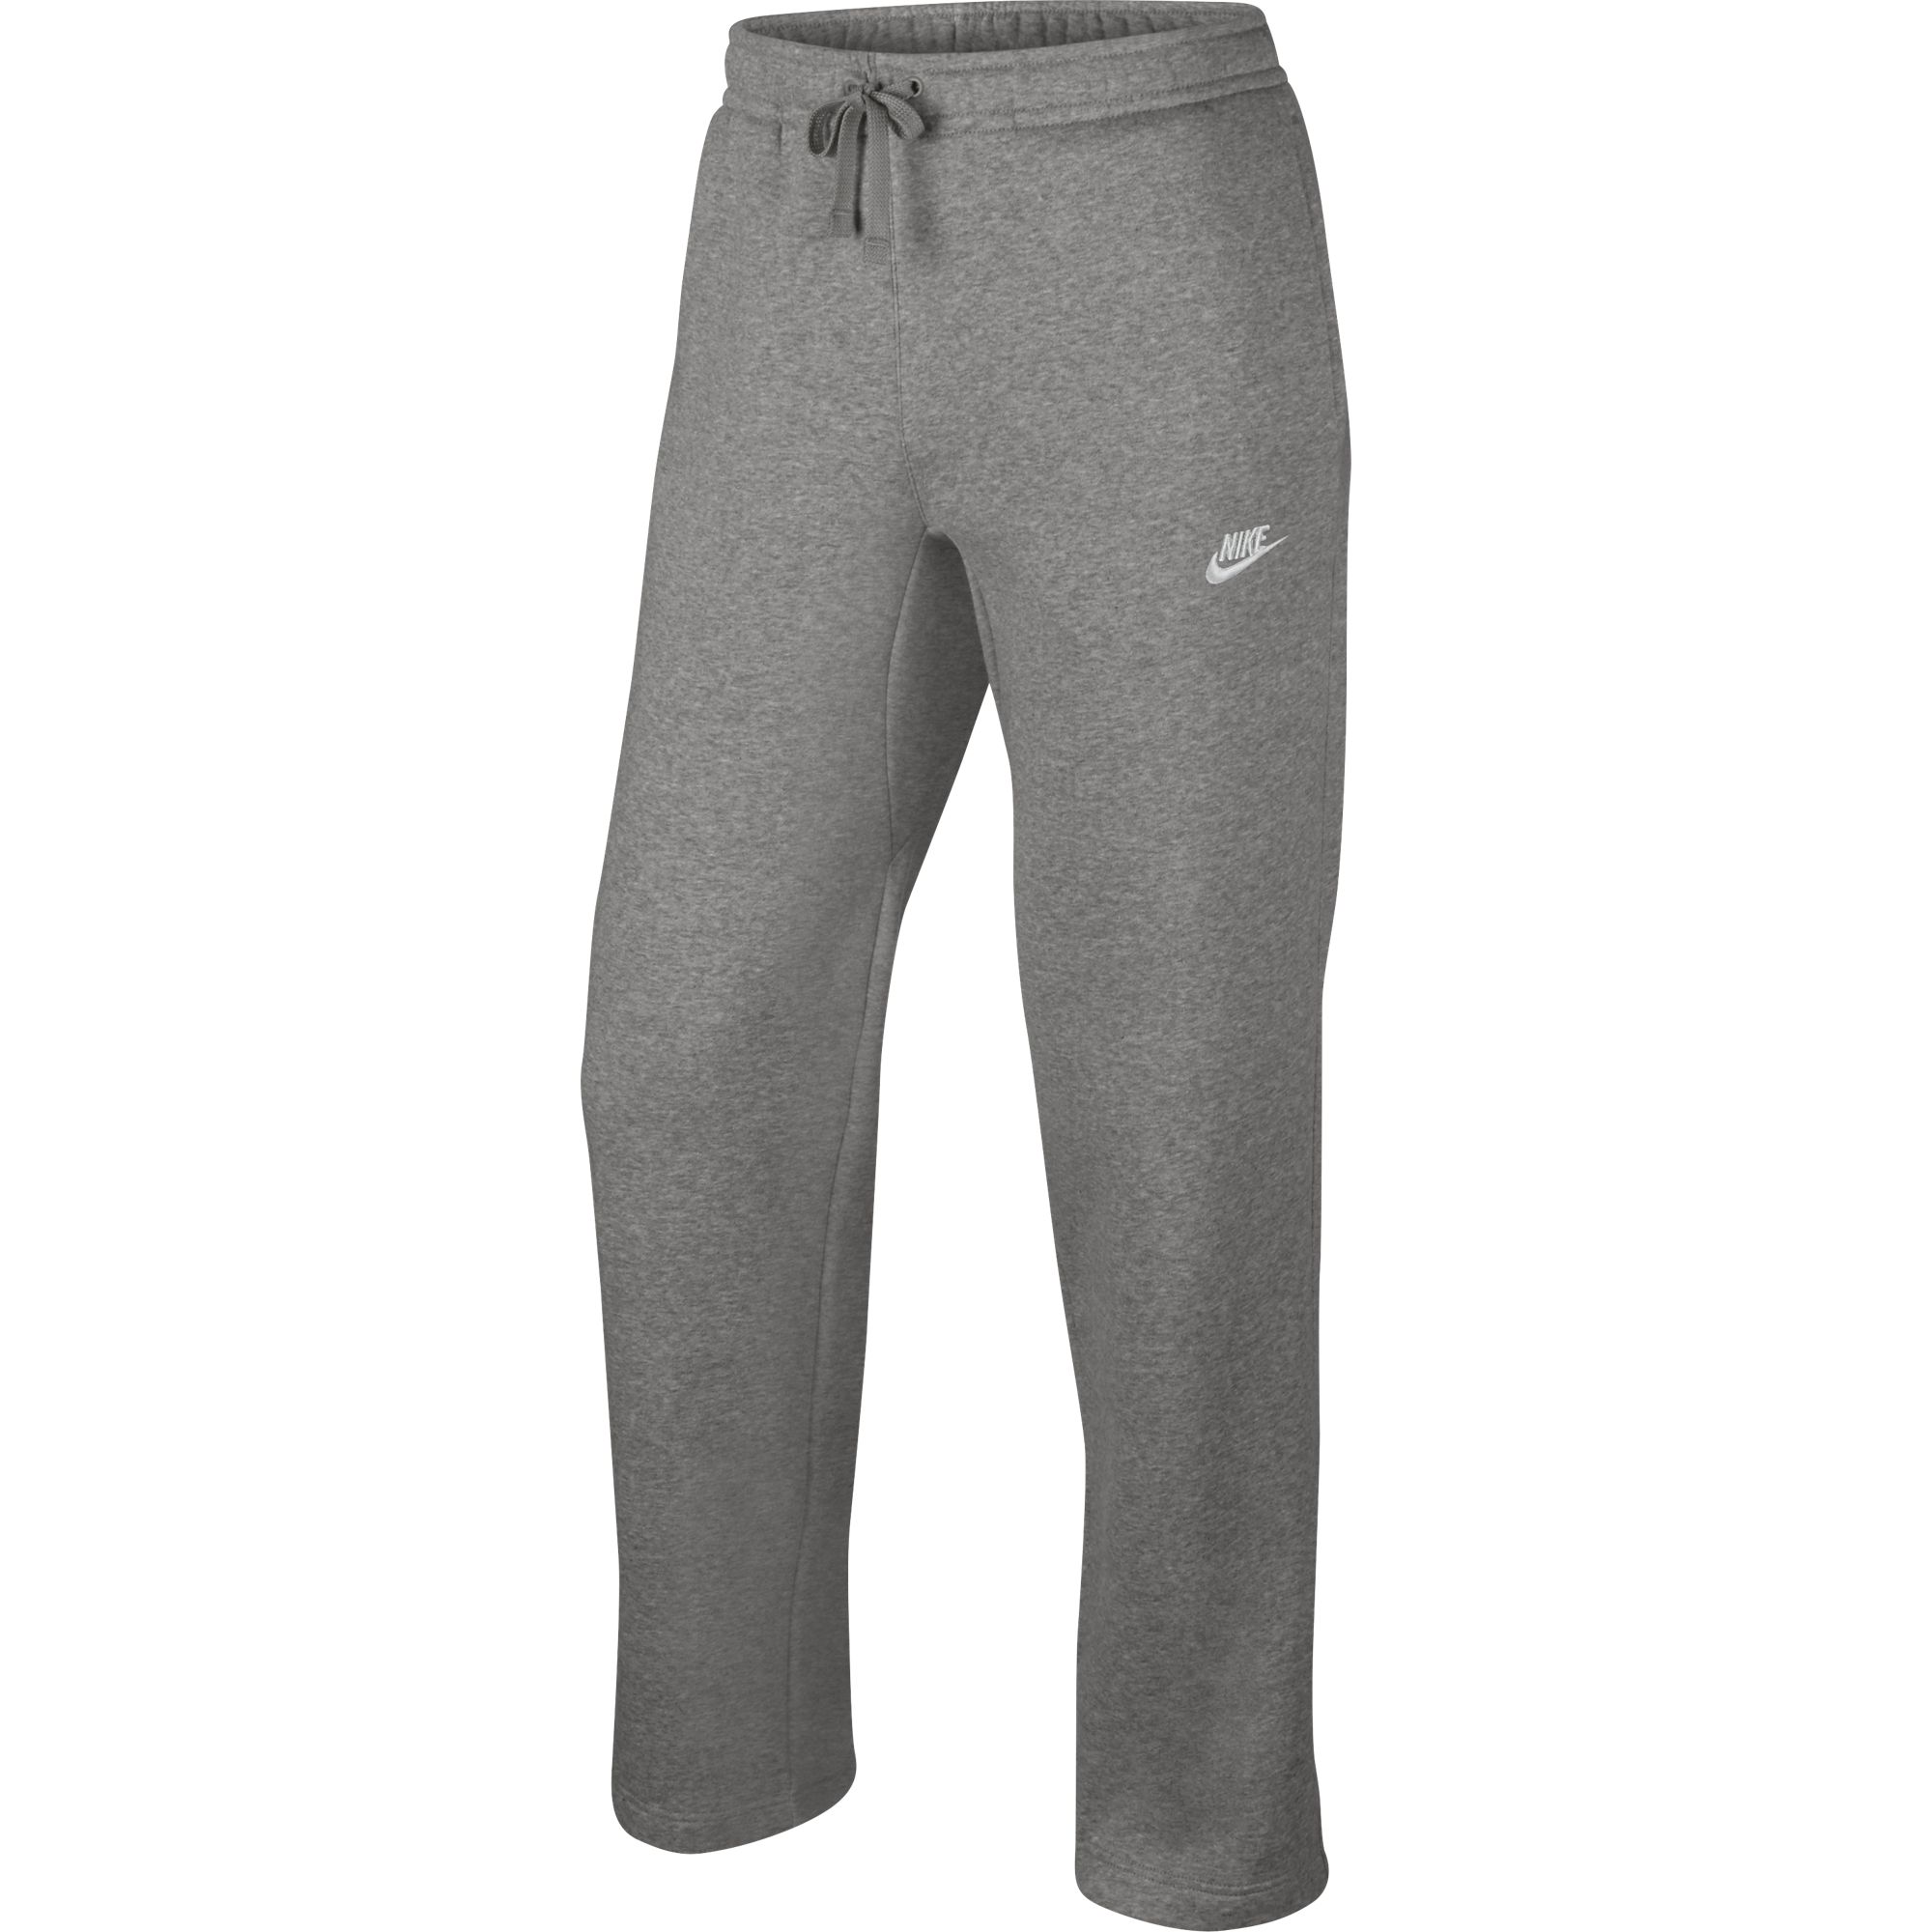 Штаны Men's Nike Sportswear Pant - картинка